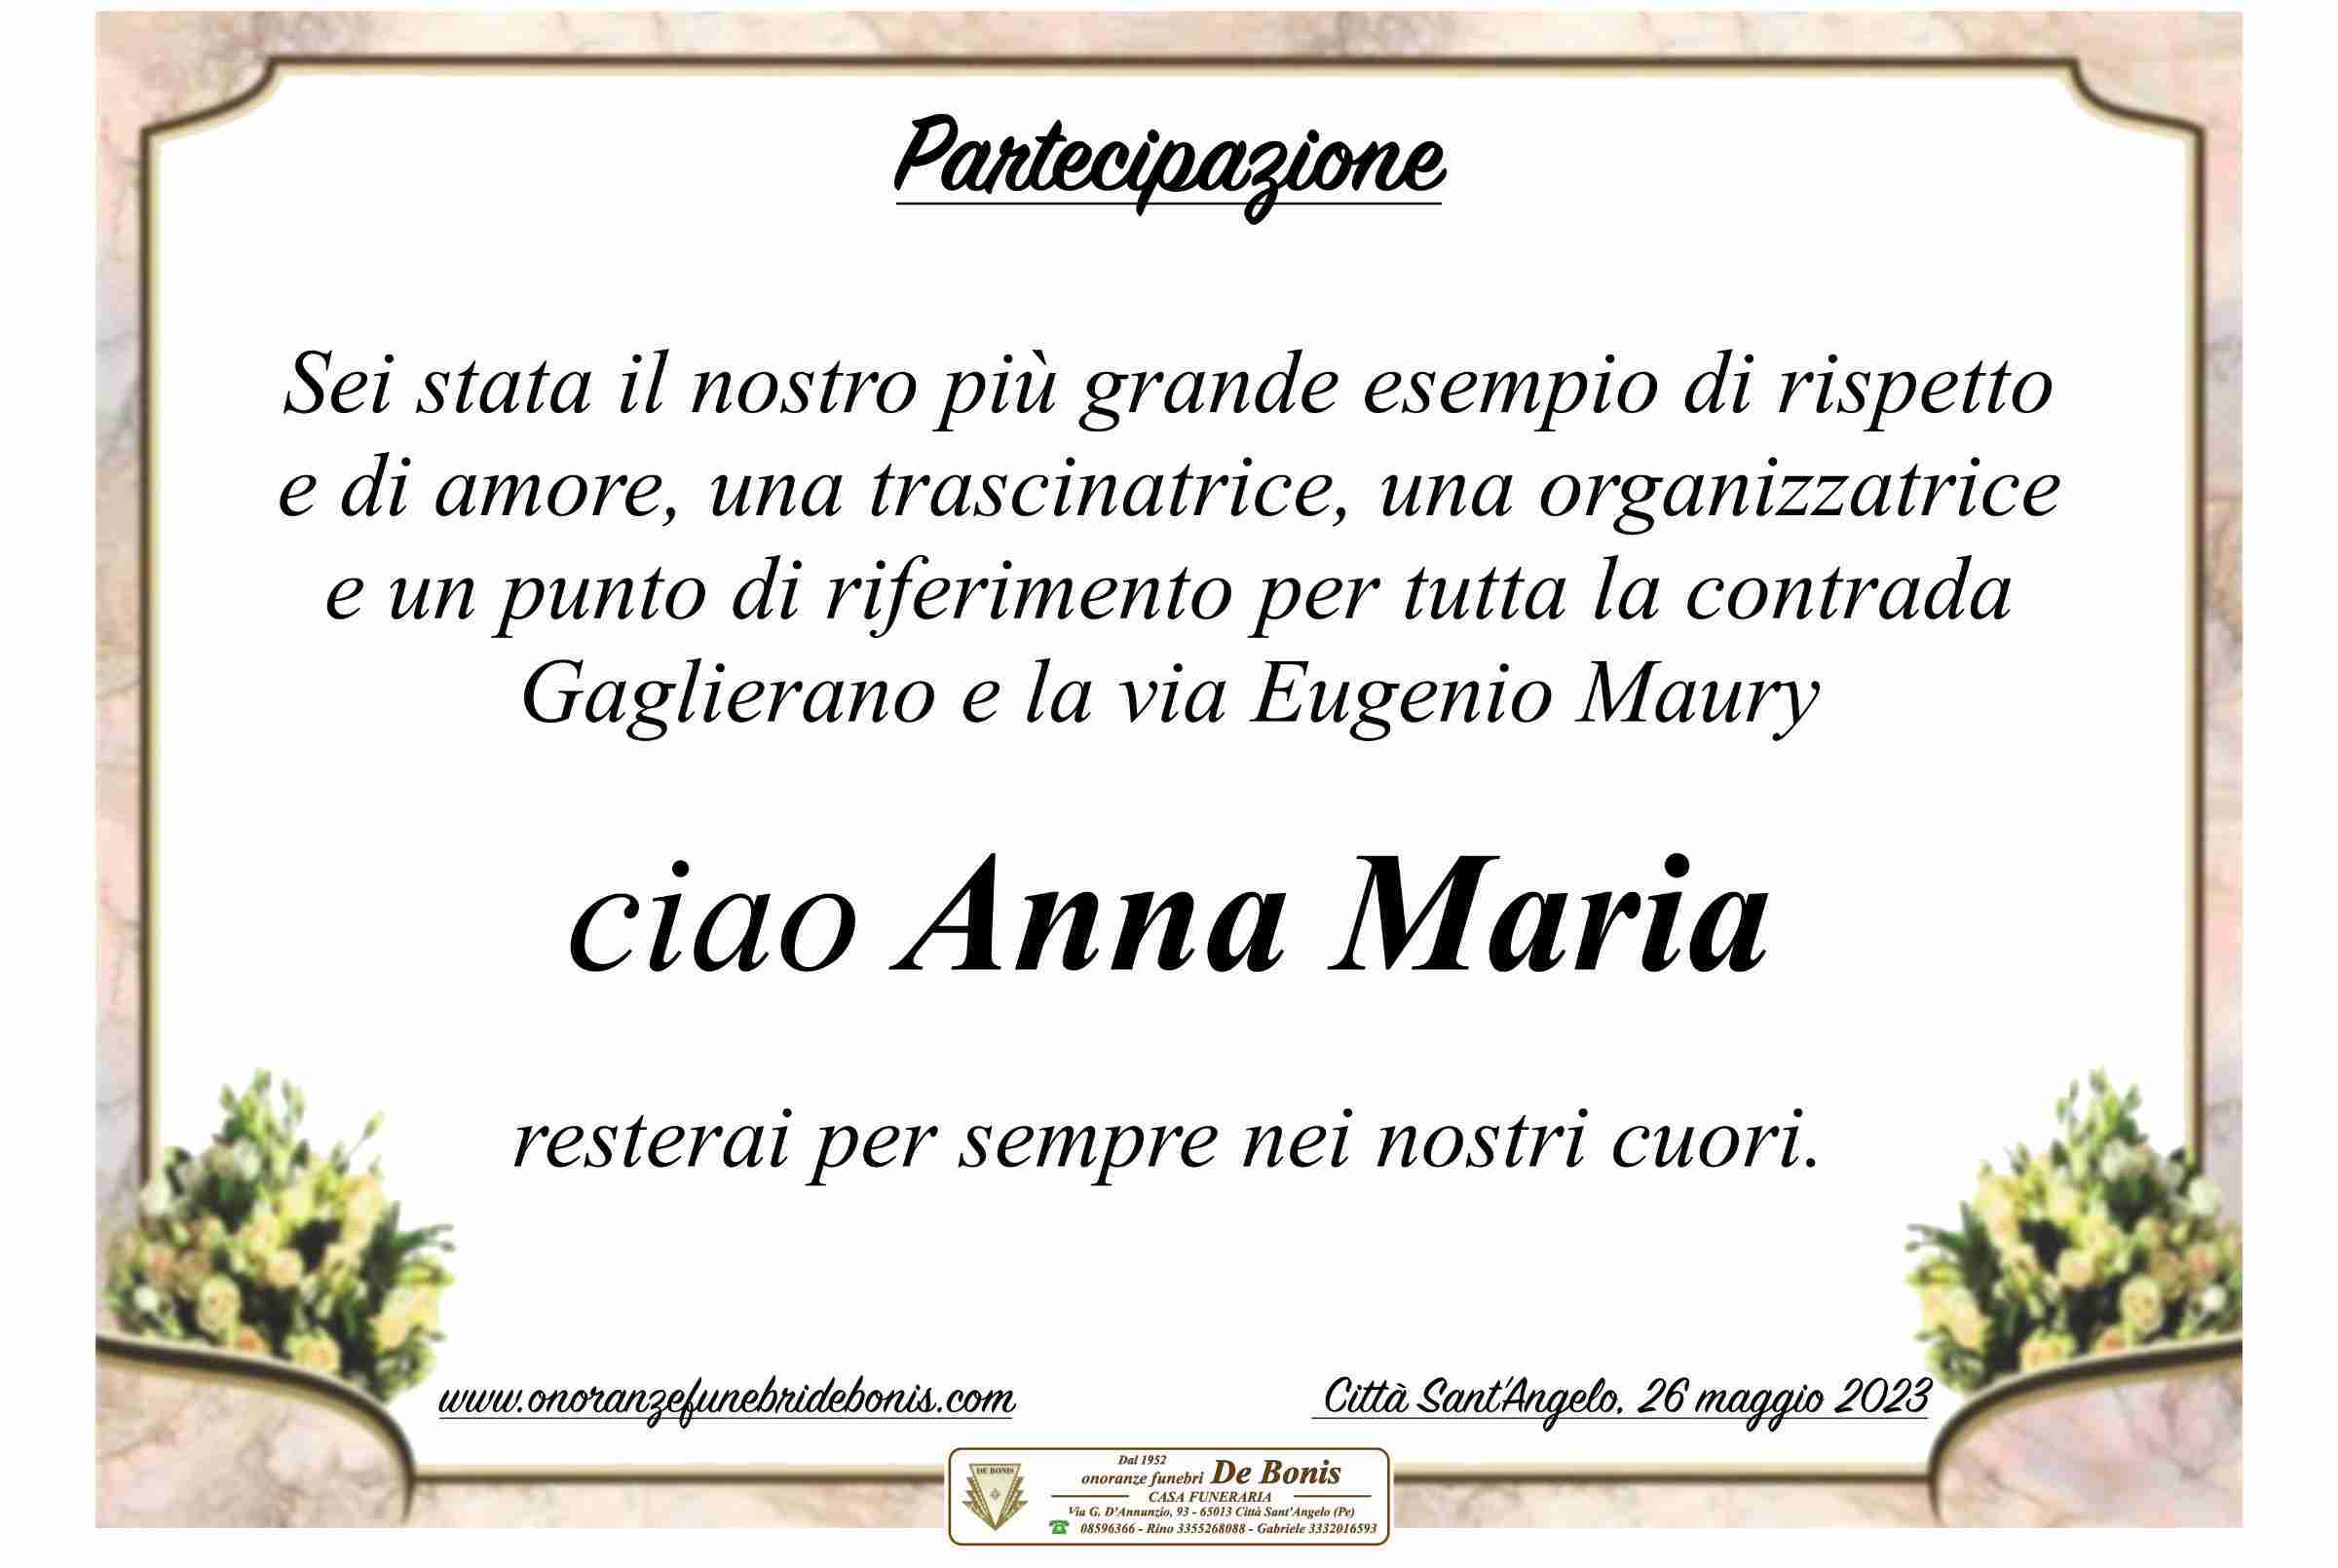 Anna Maria Liberati